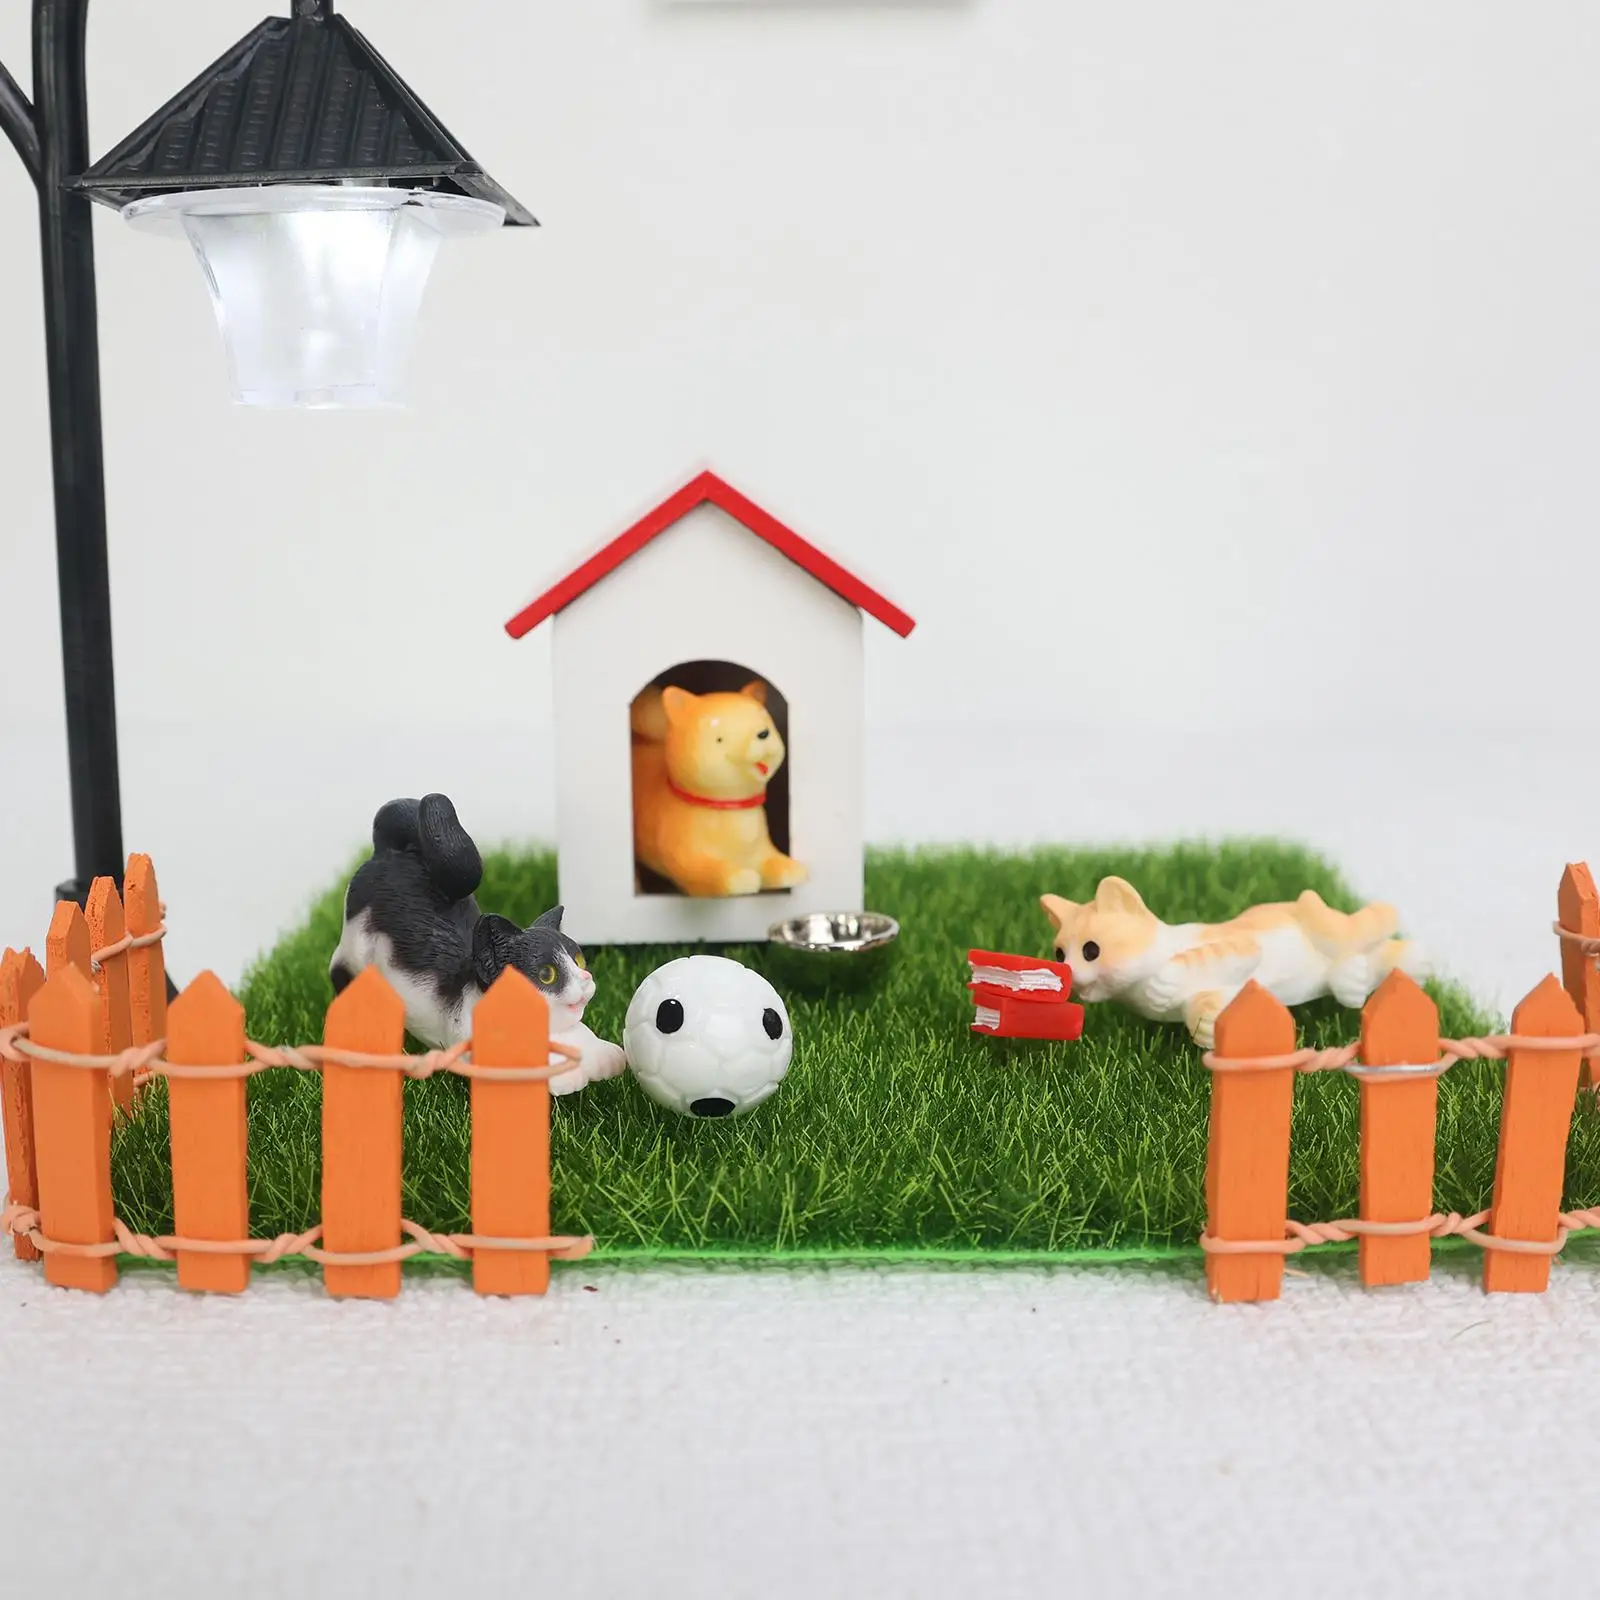 Miniature Dollhouse Accessories Pretend Play Mini 1:12 Scale Dollhouse Accessories dog house for Children Ornaments